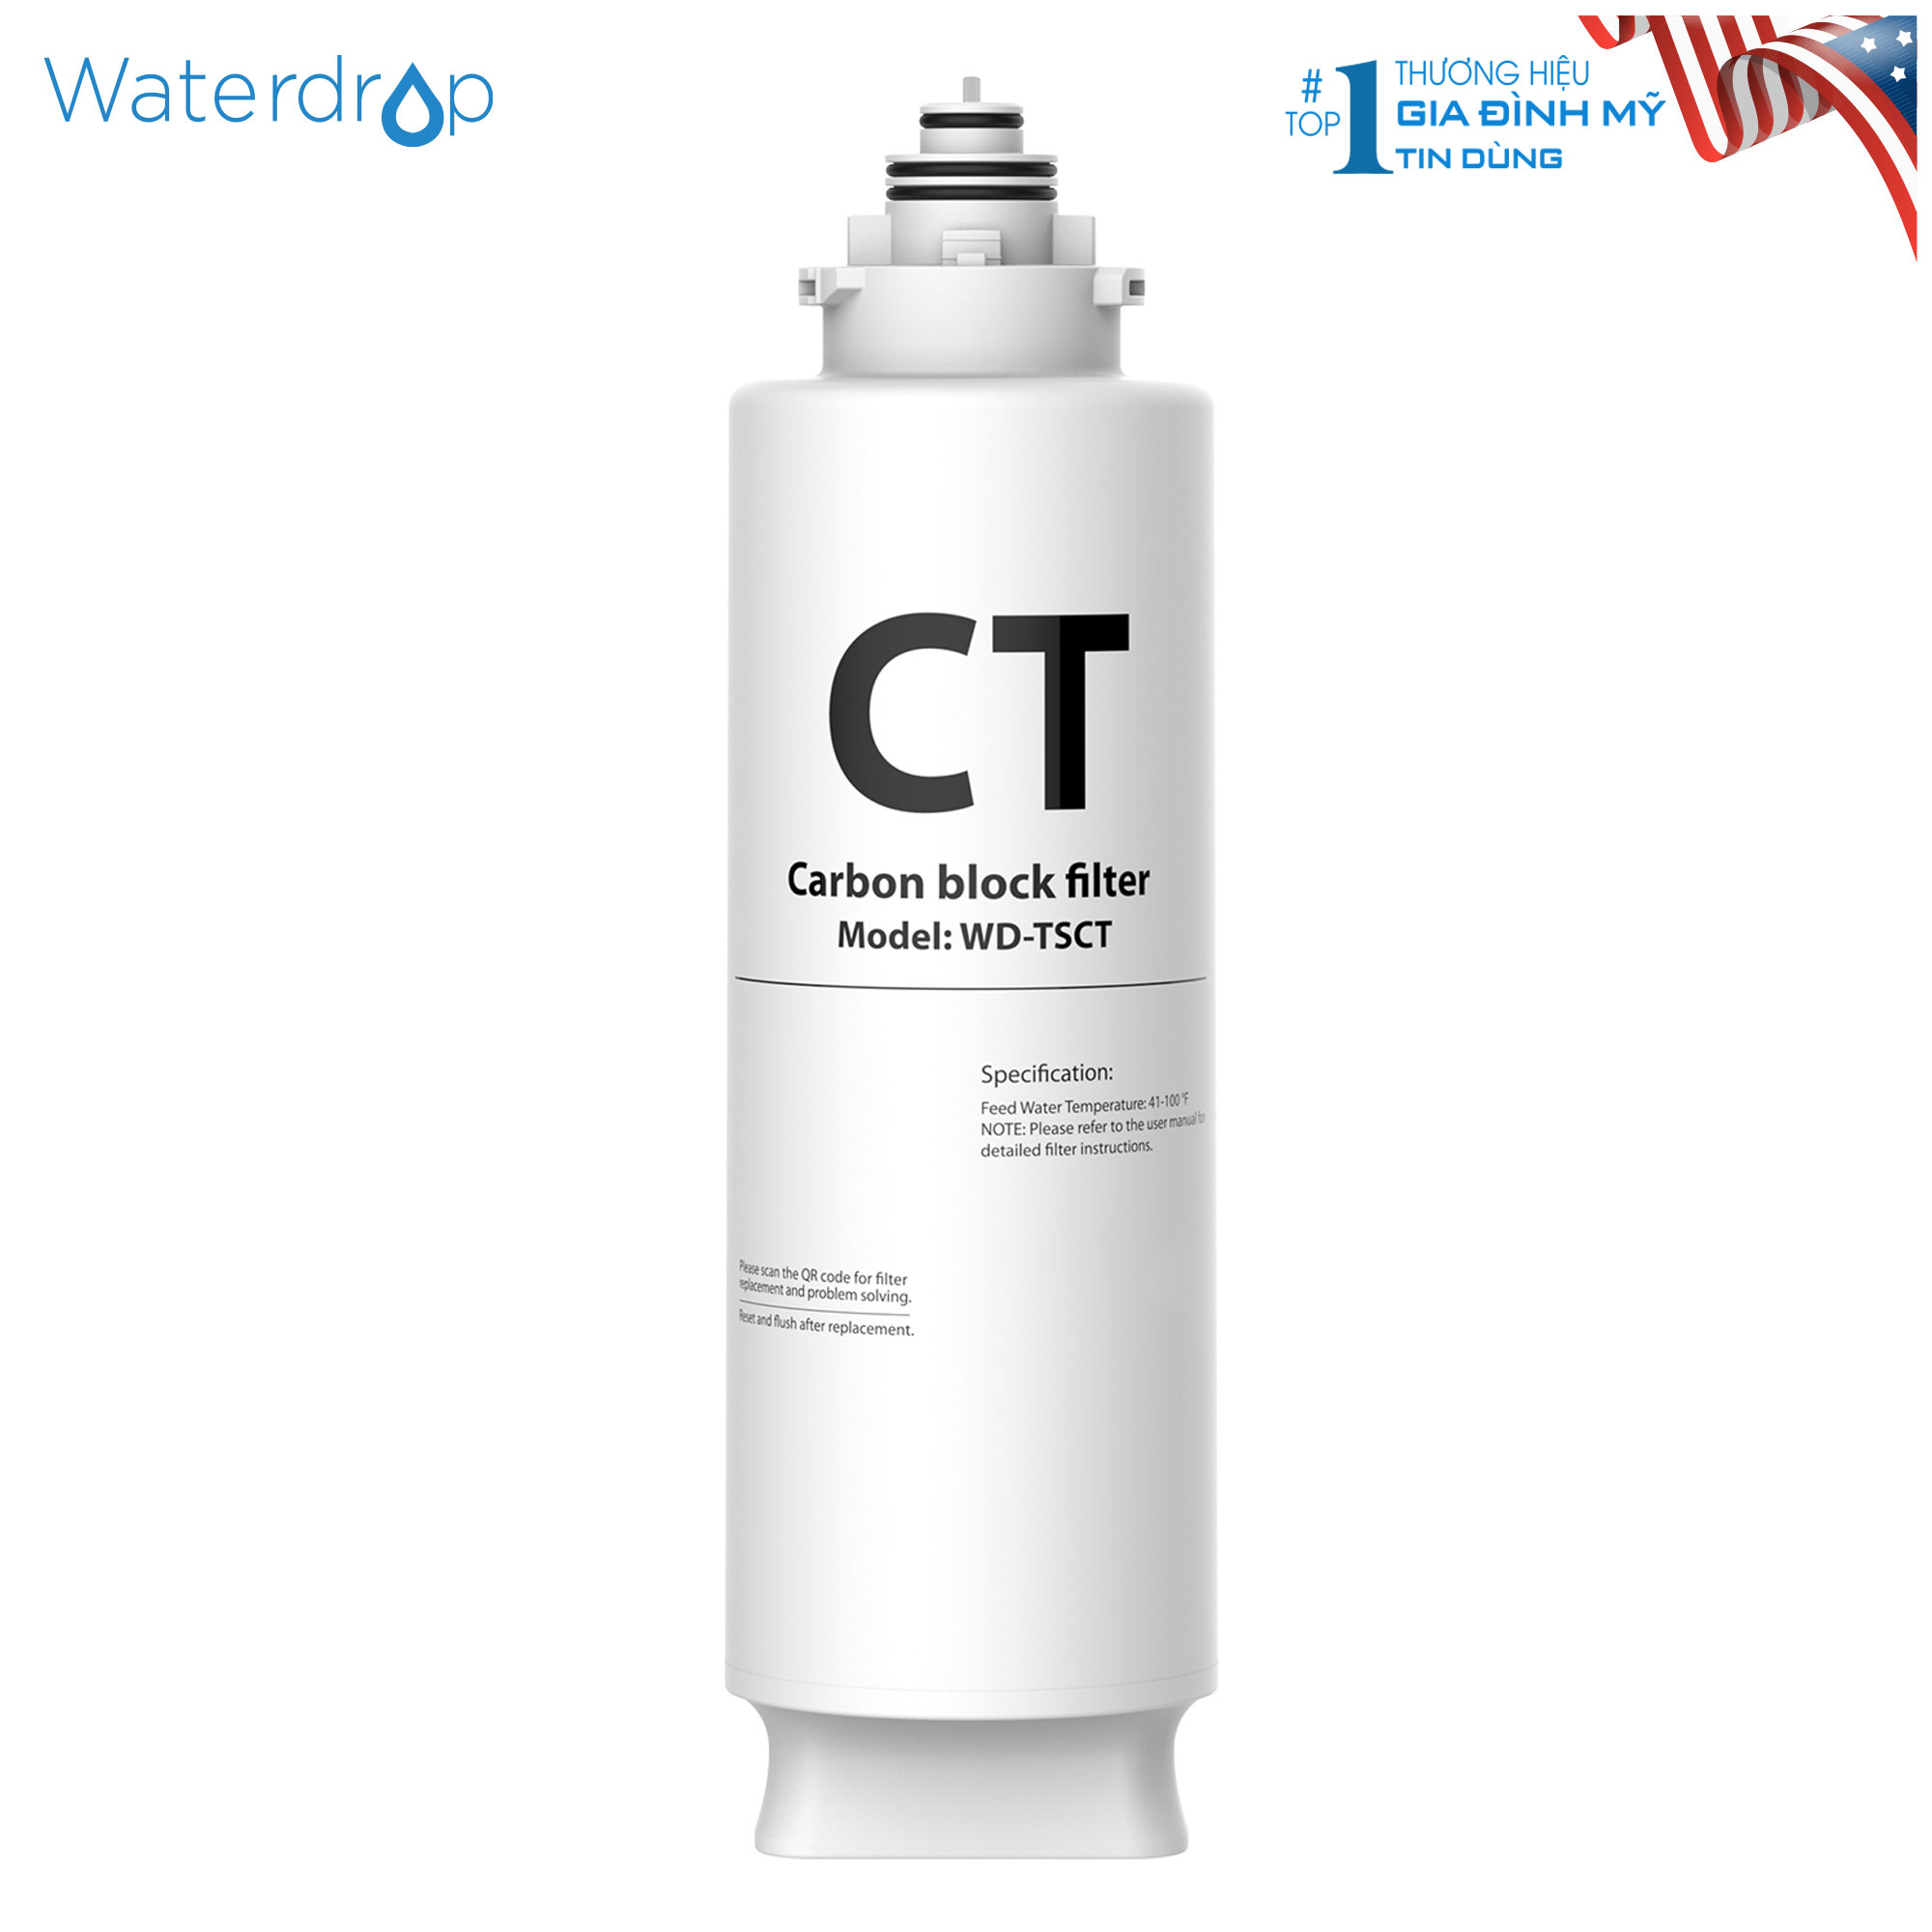 Lõi lọc CT Waterdrop WD-TSCT